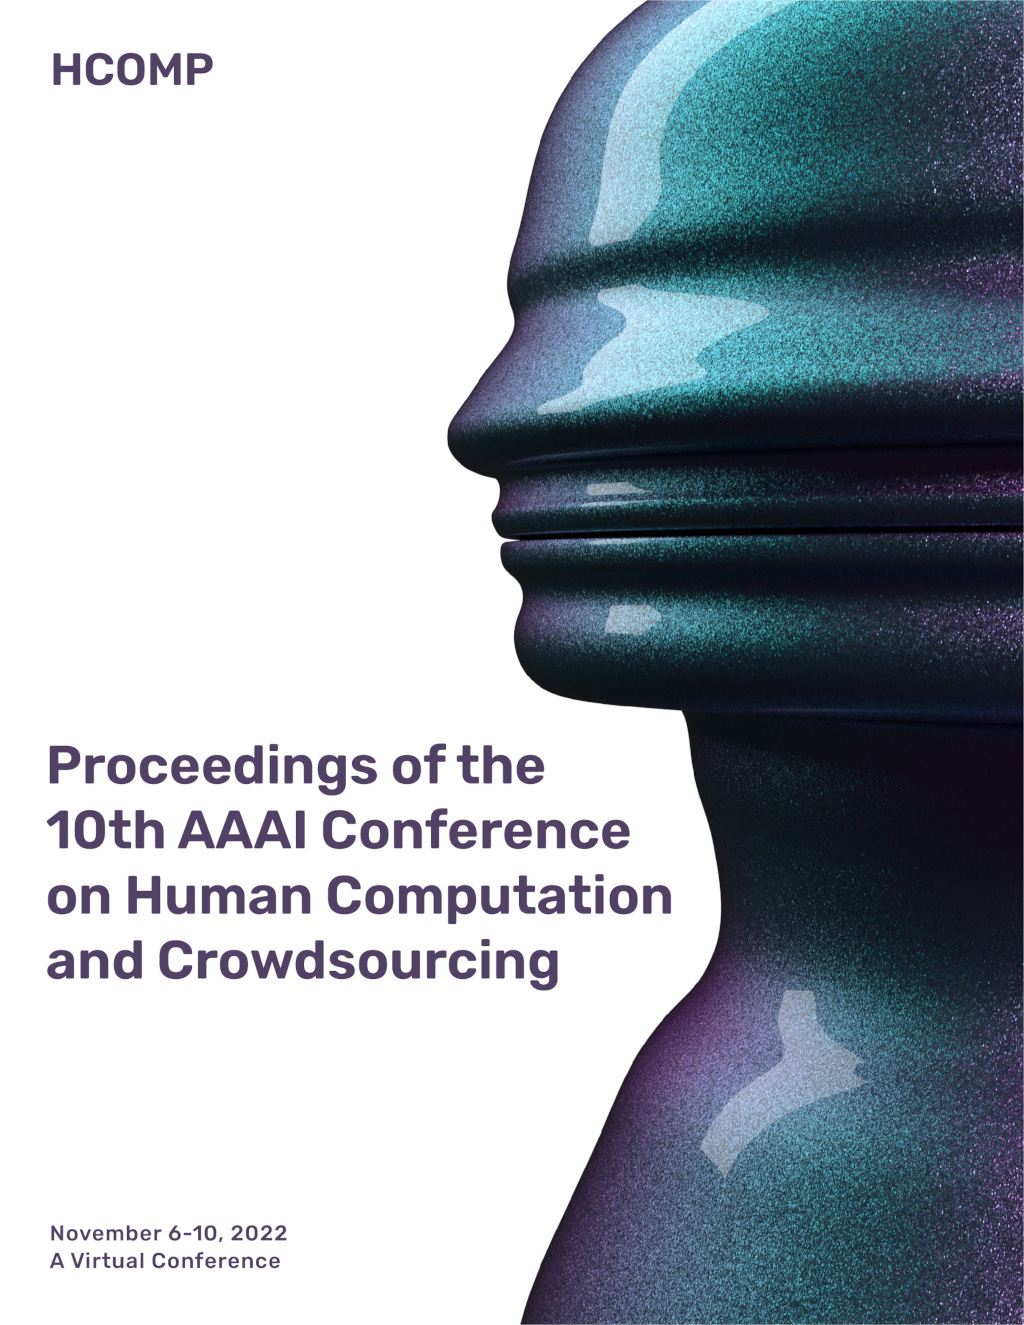 HCOMP-2022 Proceedings Cover